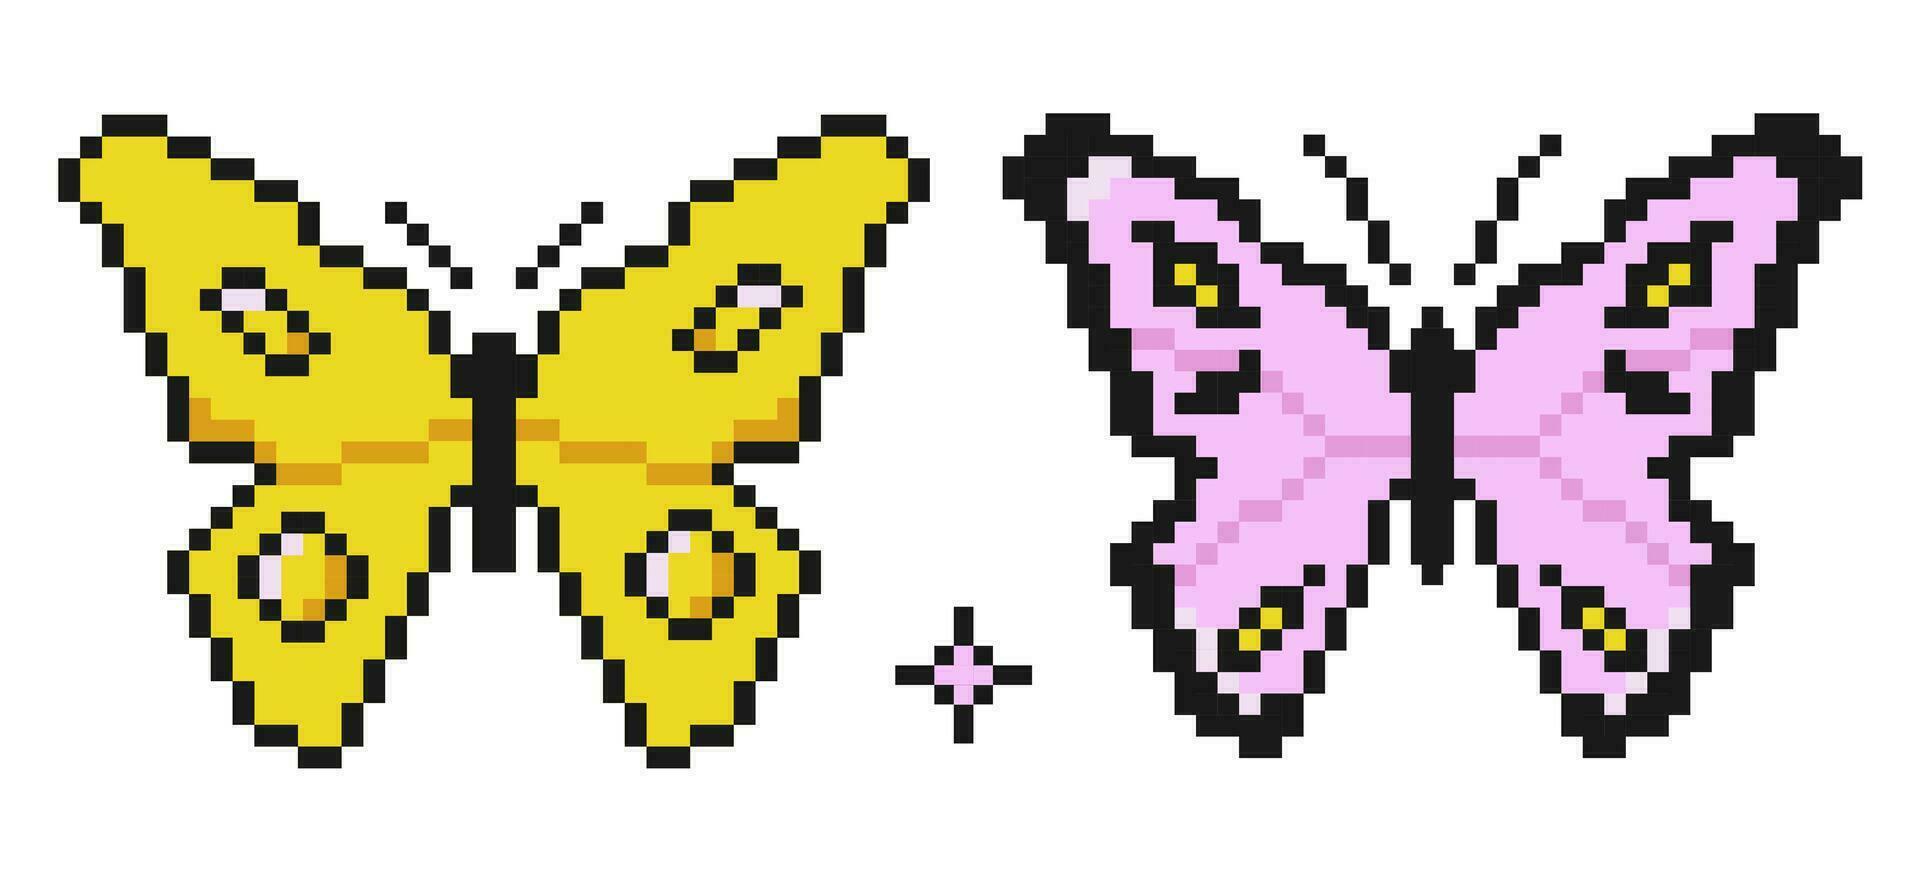 Pixel Kunst Schmetterling. Farbe pixelig Schmetterling Illustrationen. 8 Bit Stil Insekt Symbole. retro Video Spiel ästhetisch vektor